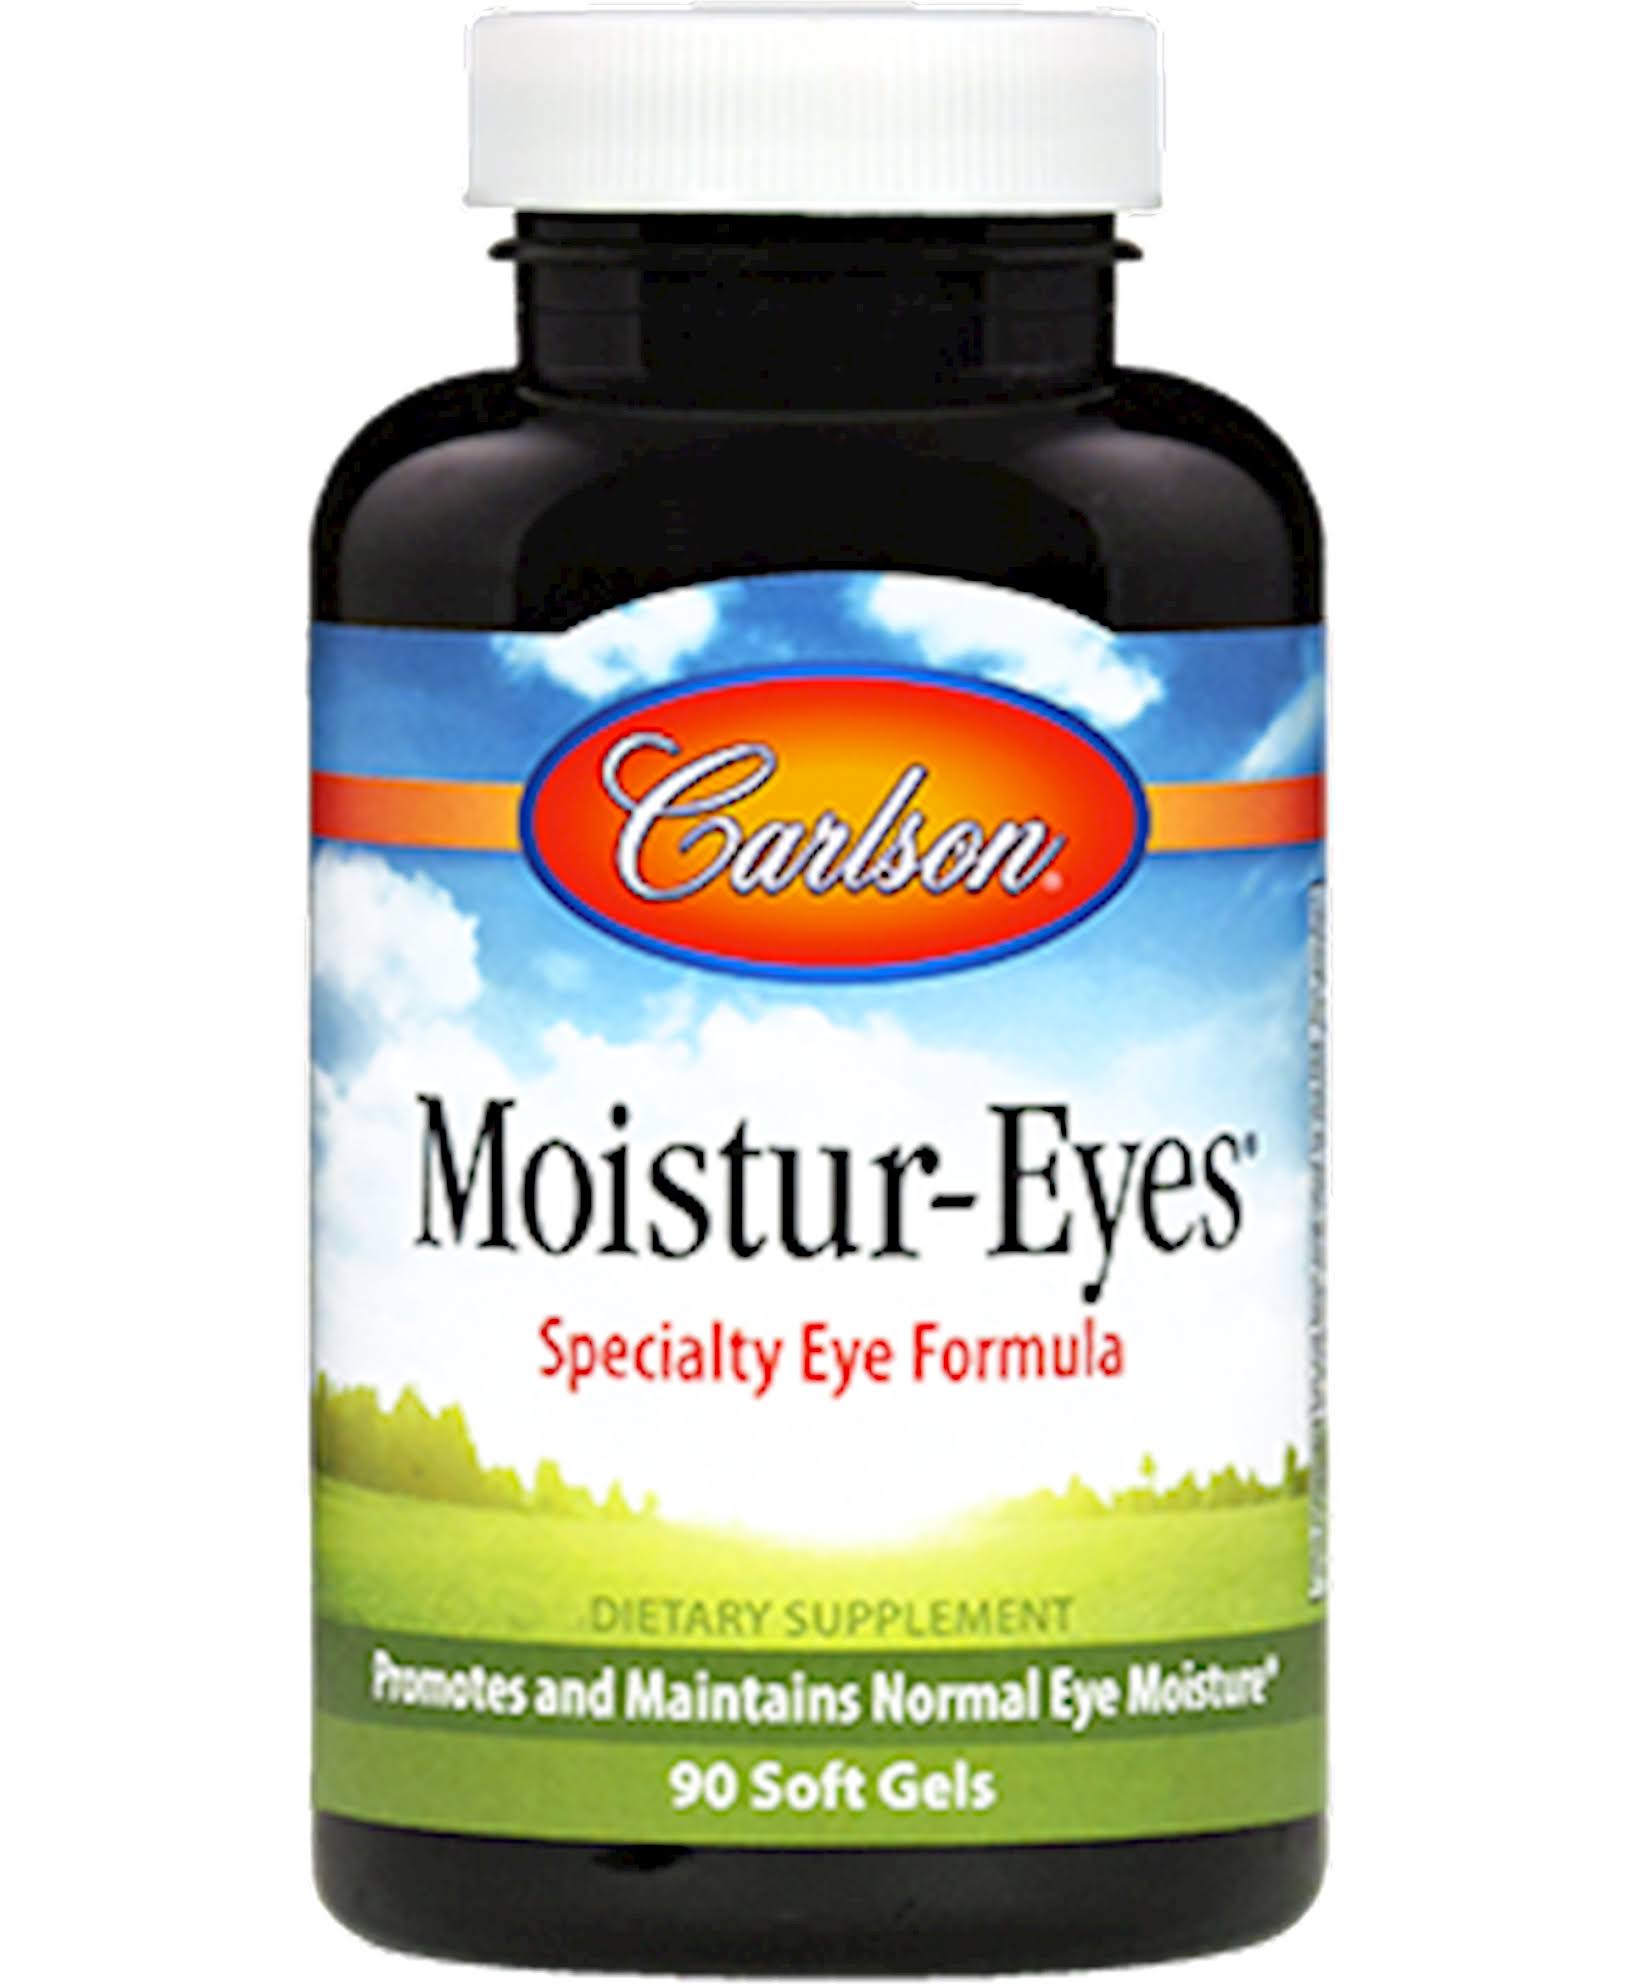 Carlson Moistur-Eyes Dietary Supplement - 90 Softgels